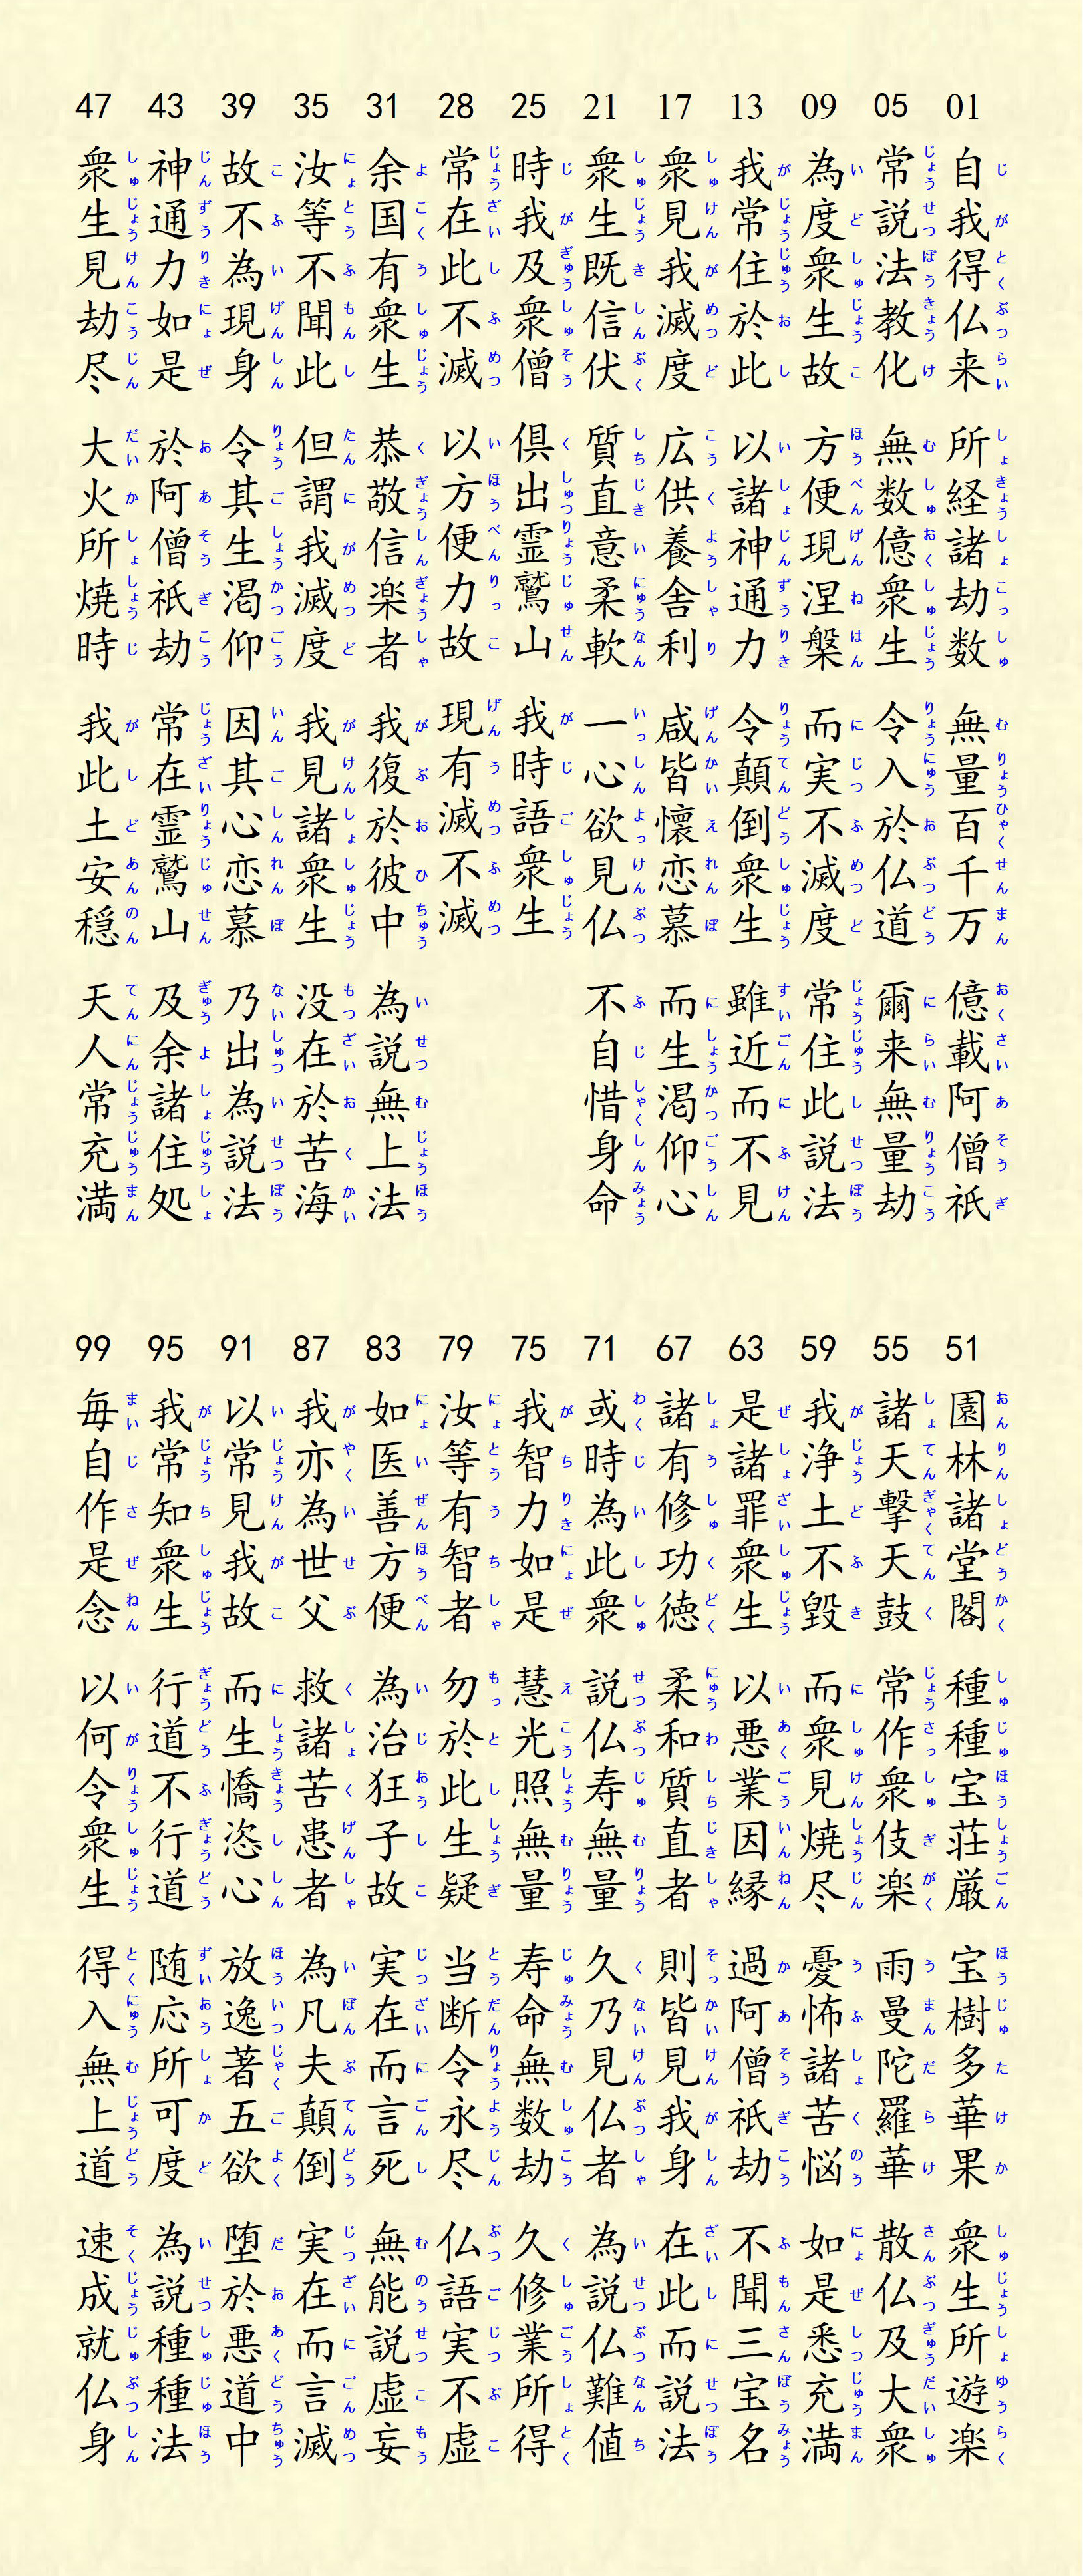 File:JIGAGE of HOKEKYOU or Lotus Sutra in Japan assigned numbers